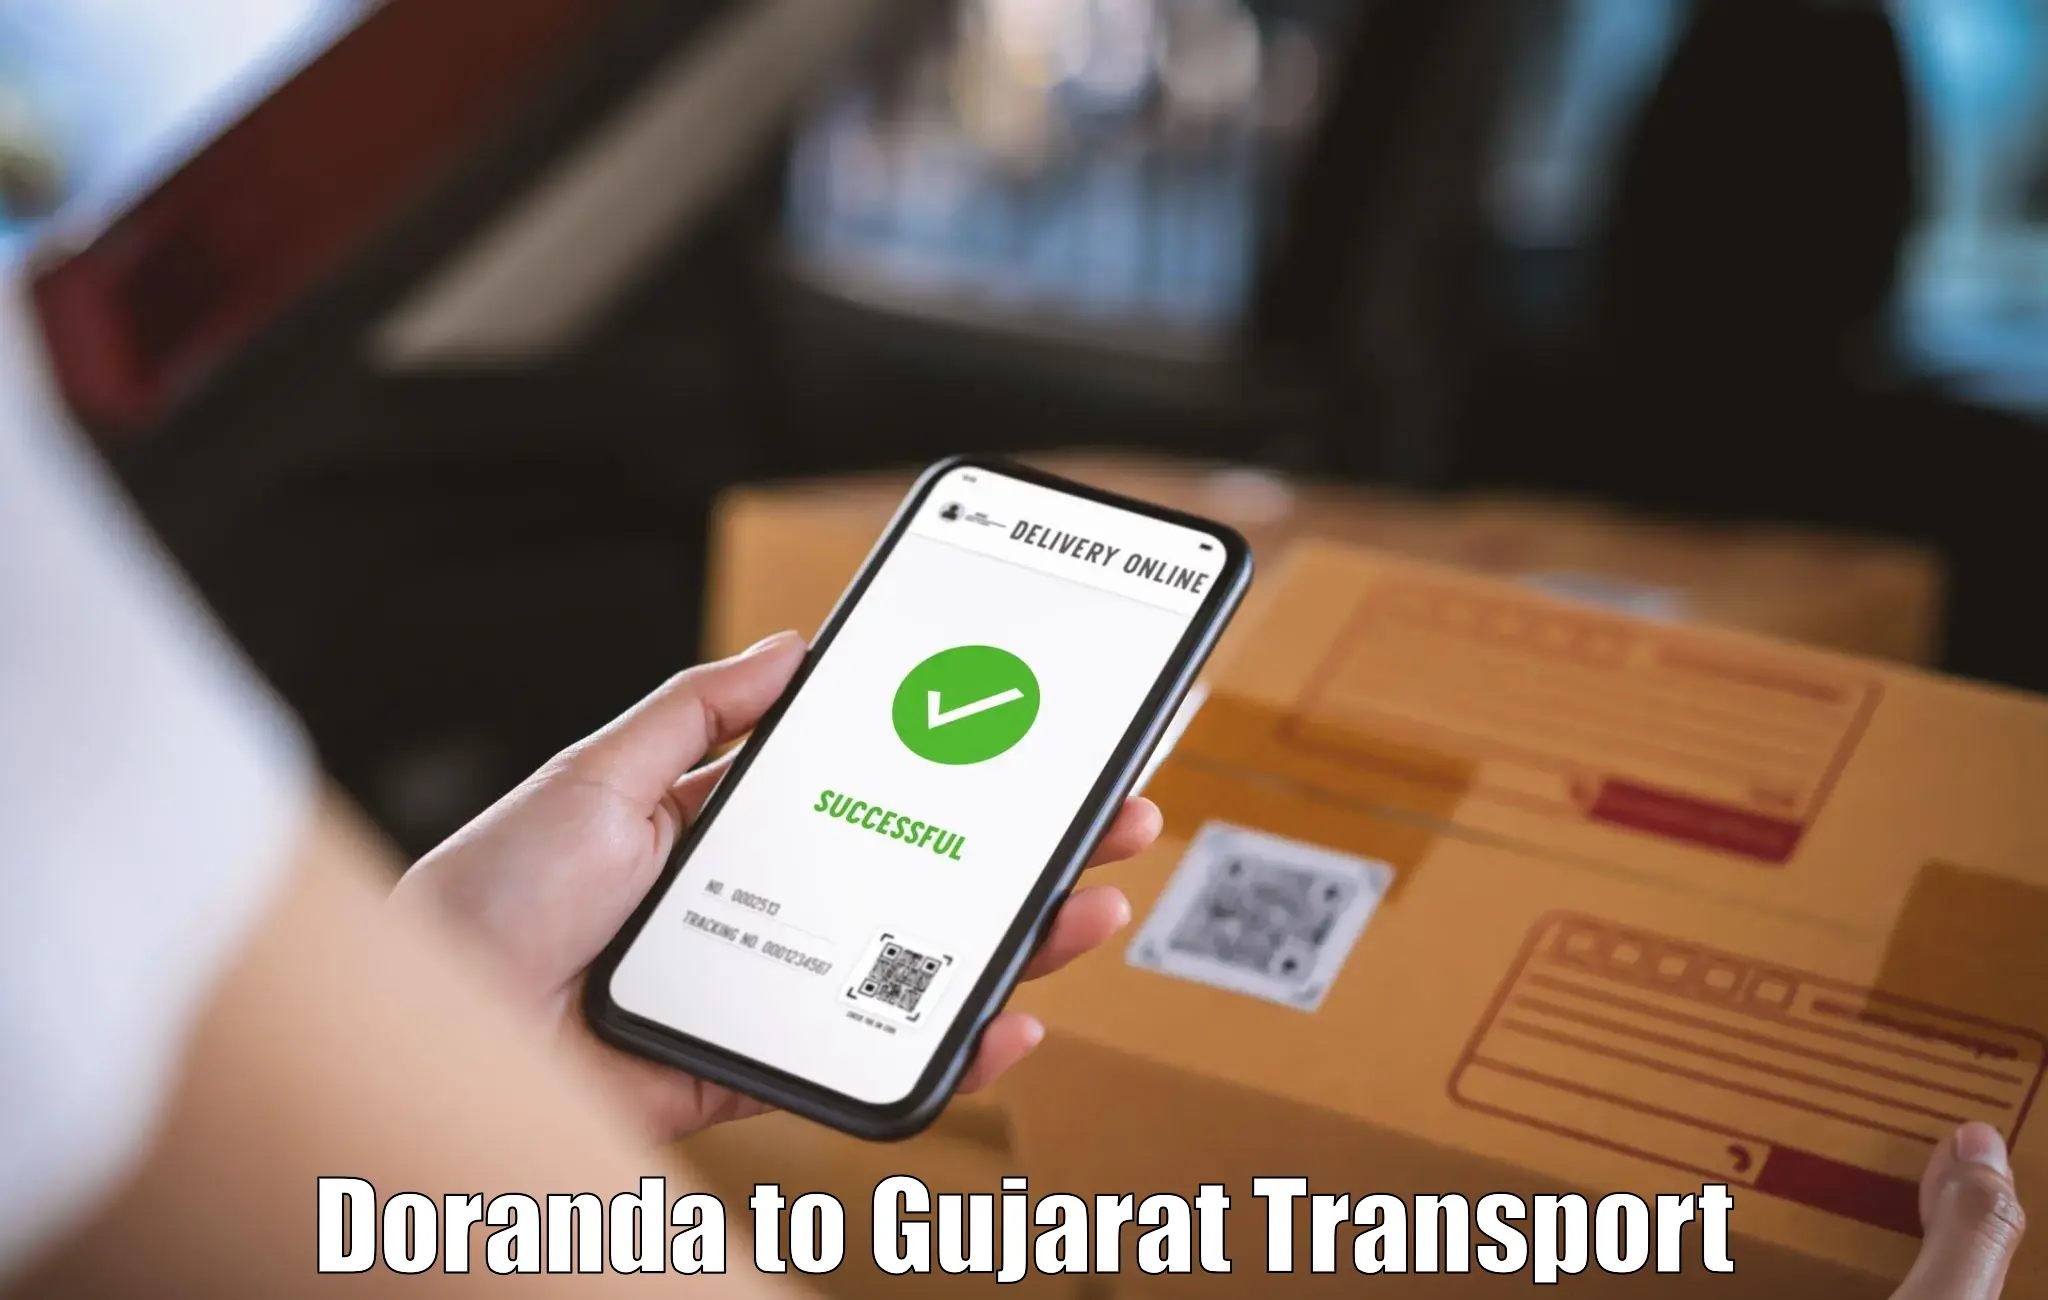 Container transport service Doranda to Gujarat